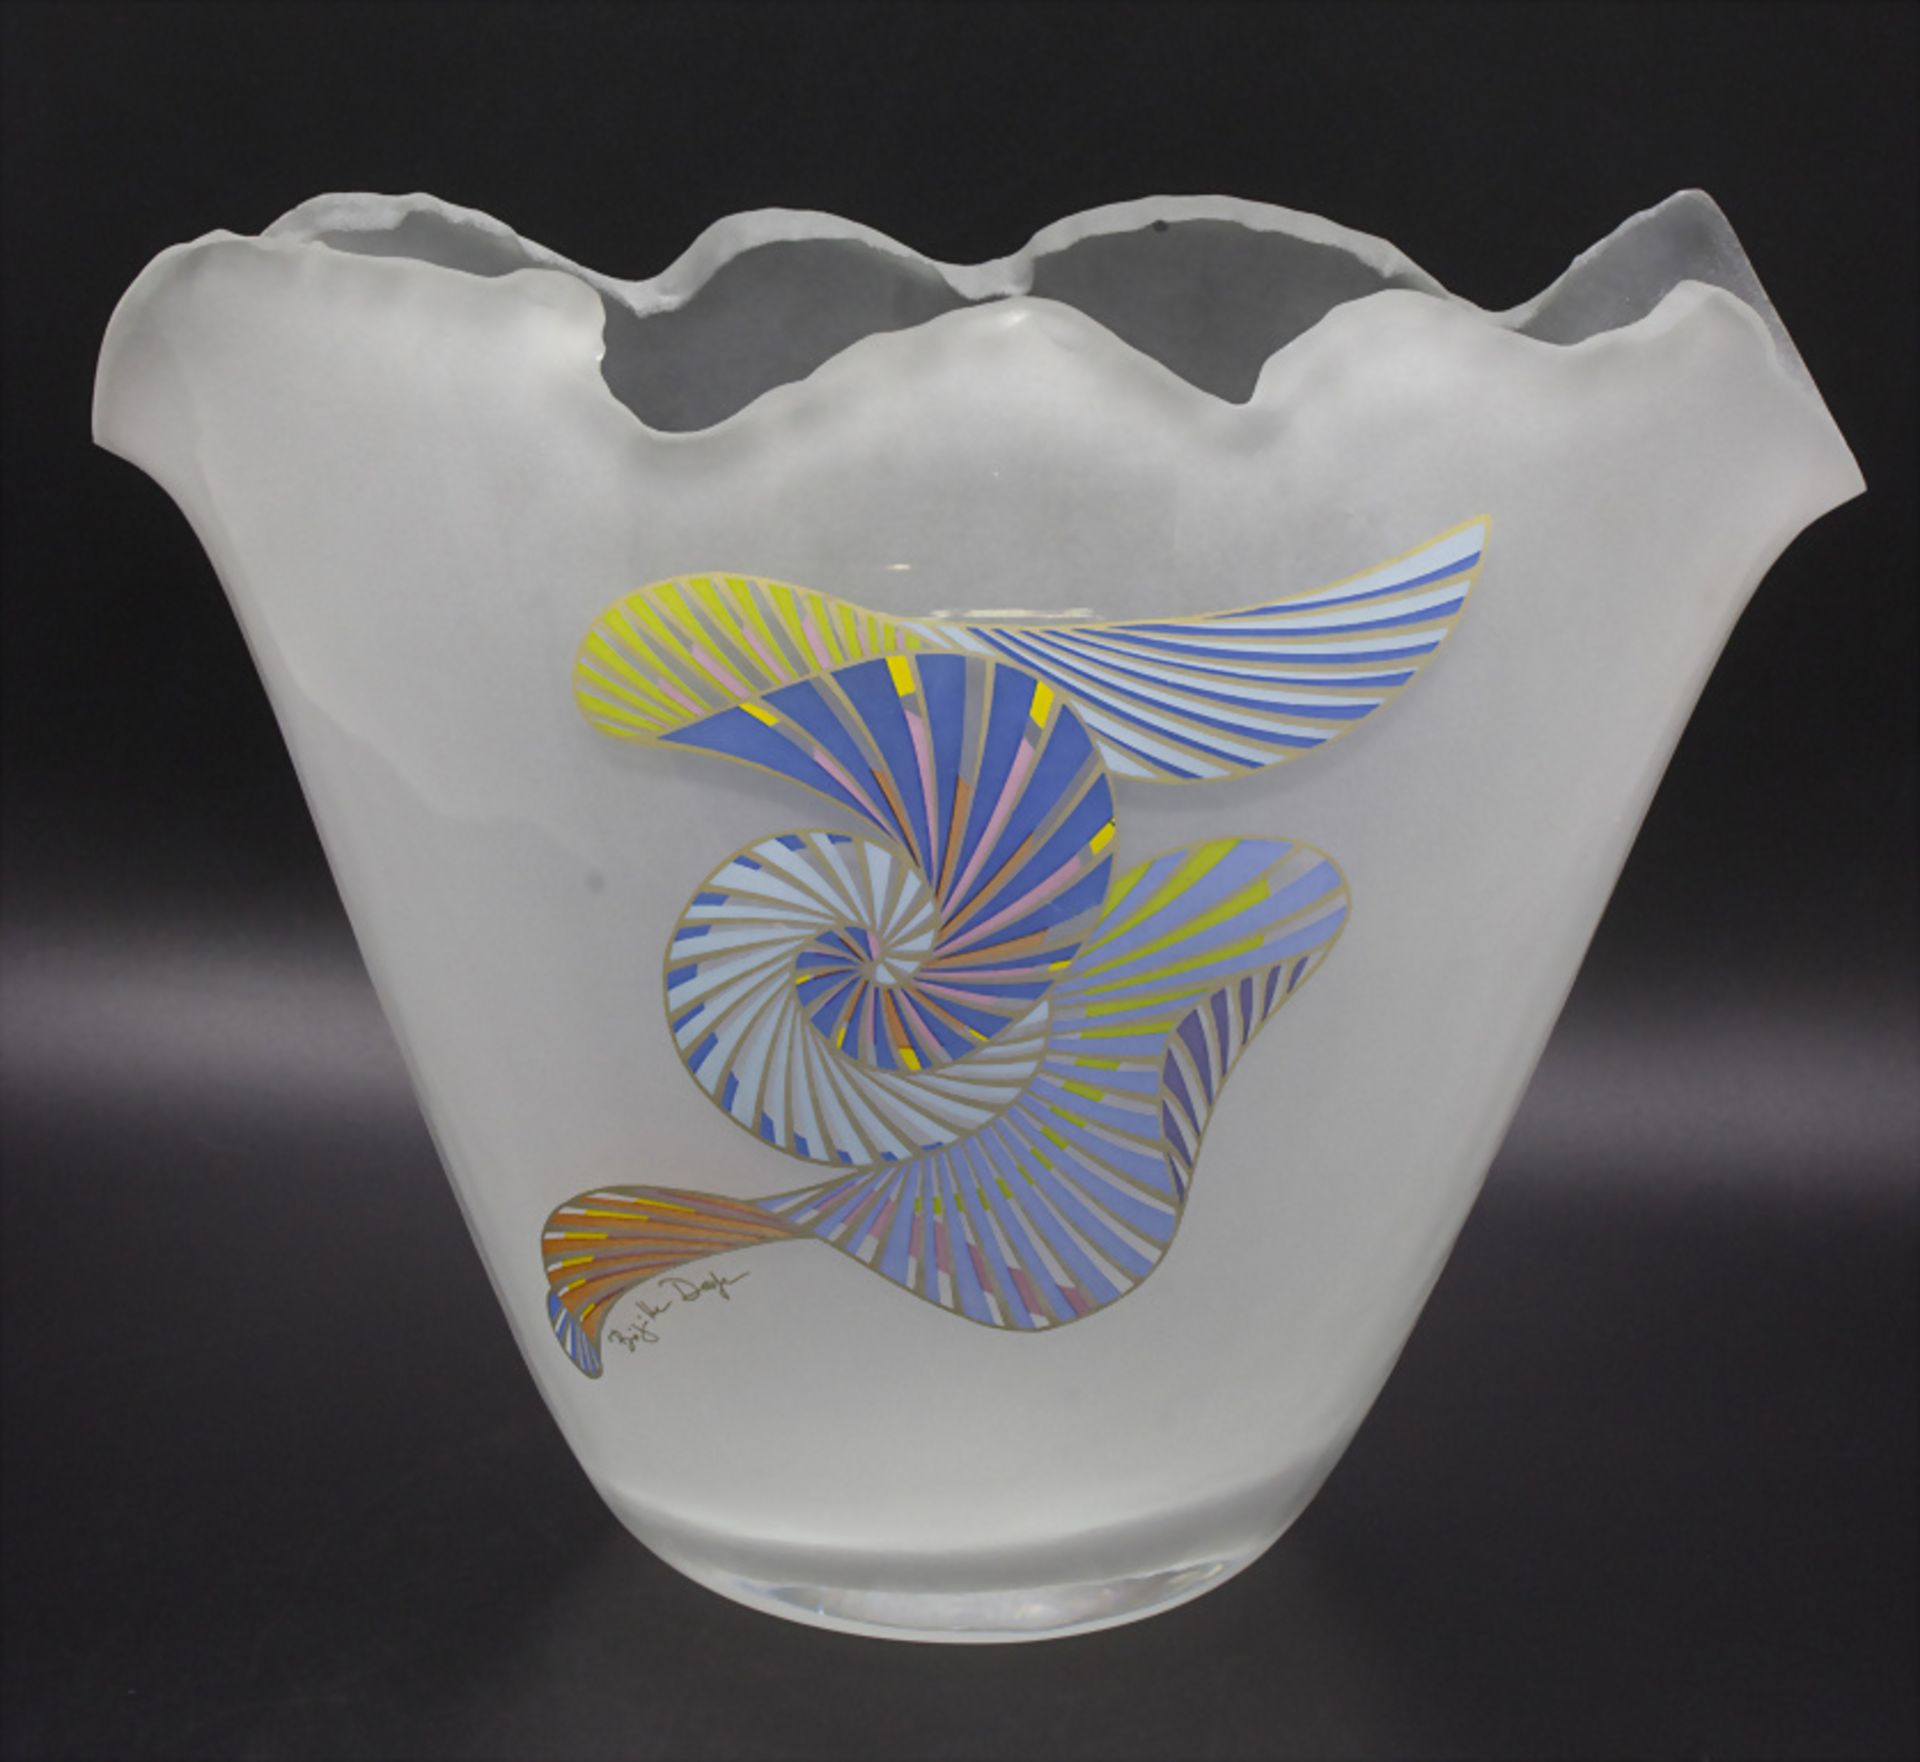 Glasziervase / A decorative glass vase, Rosenthal, Entwurf Brigitte Doege, um 1990